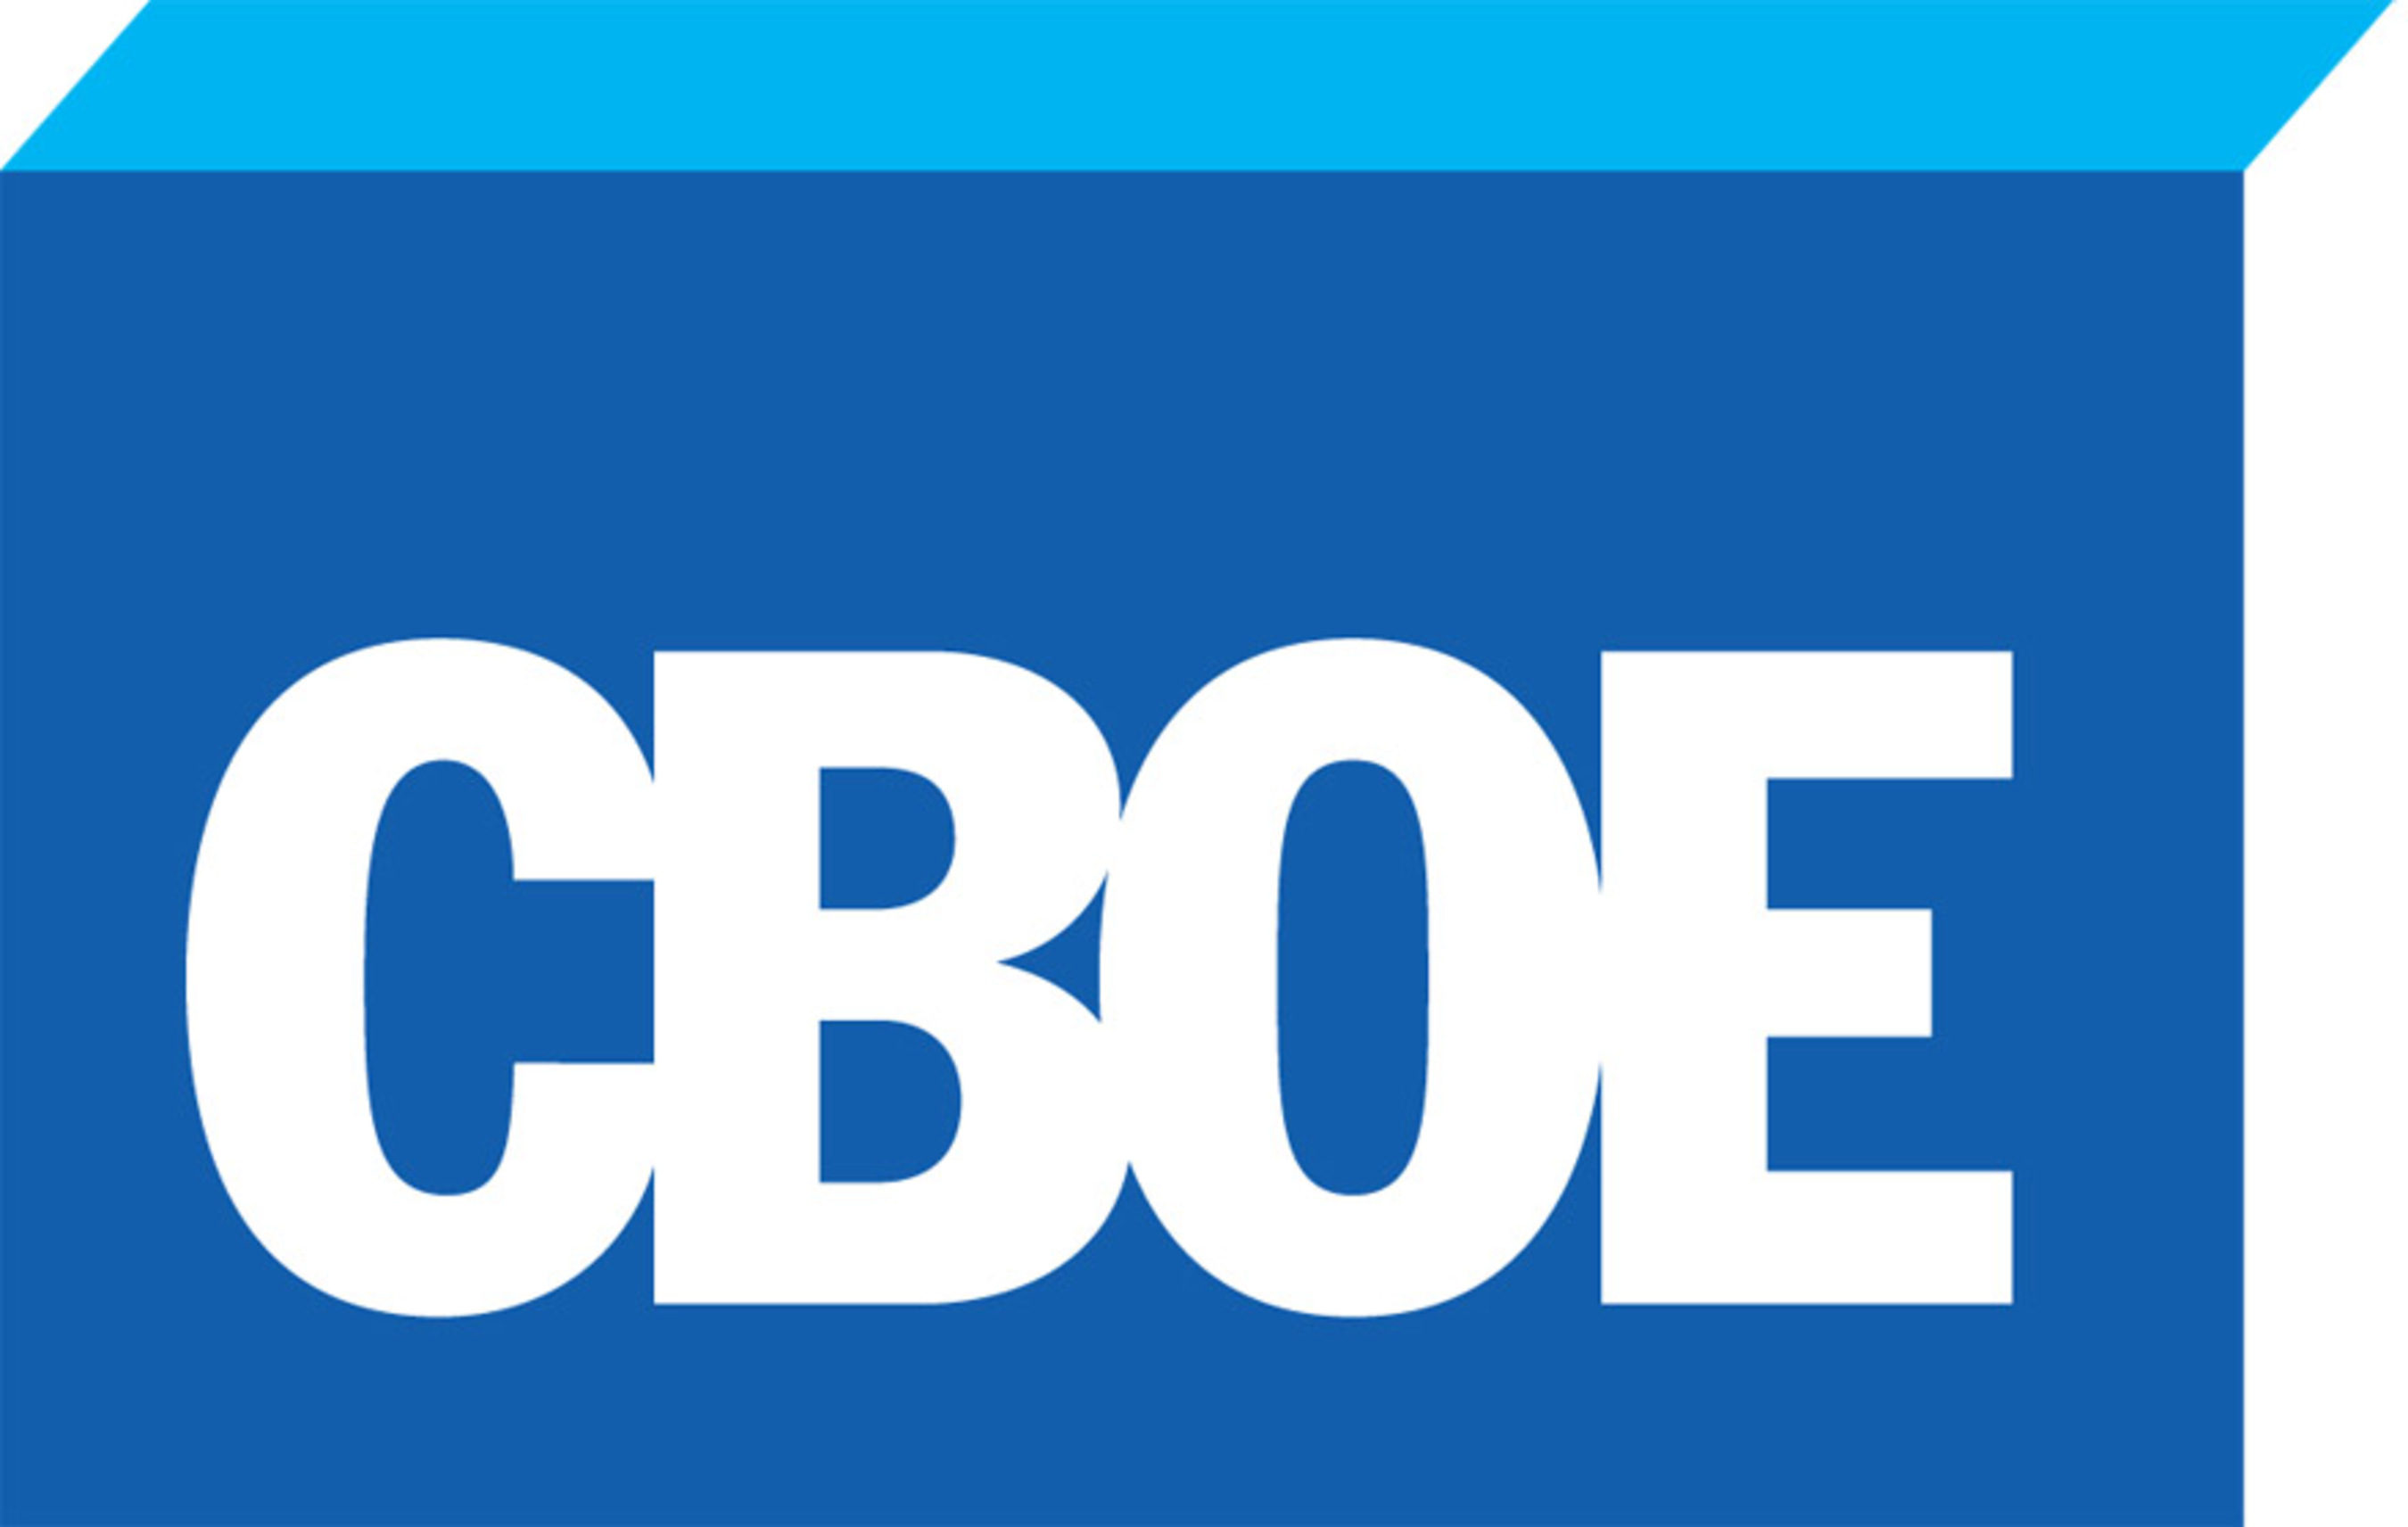 Chicago Board Options Exchange (CBOE) logo.